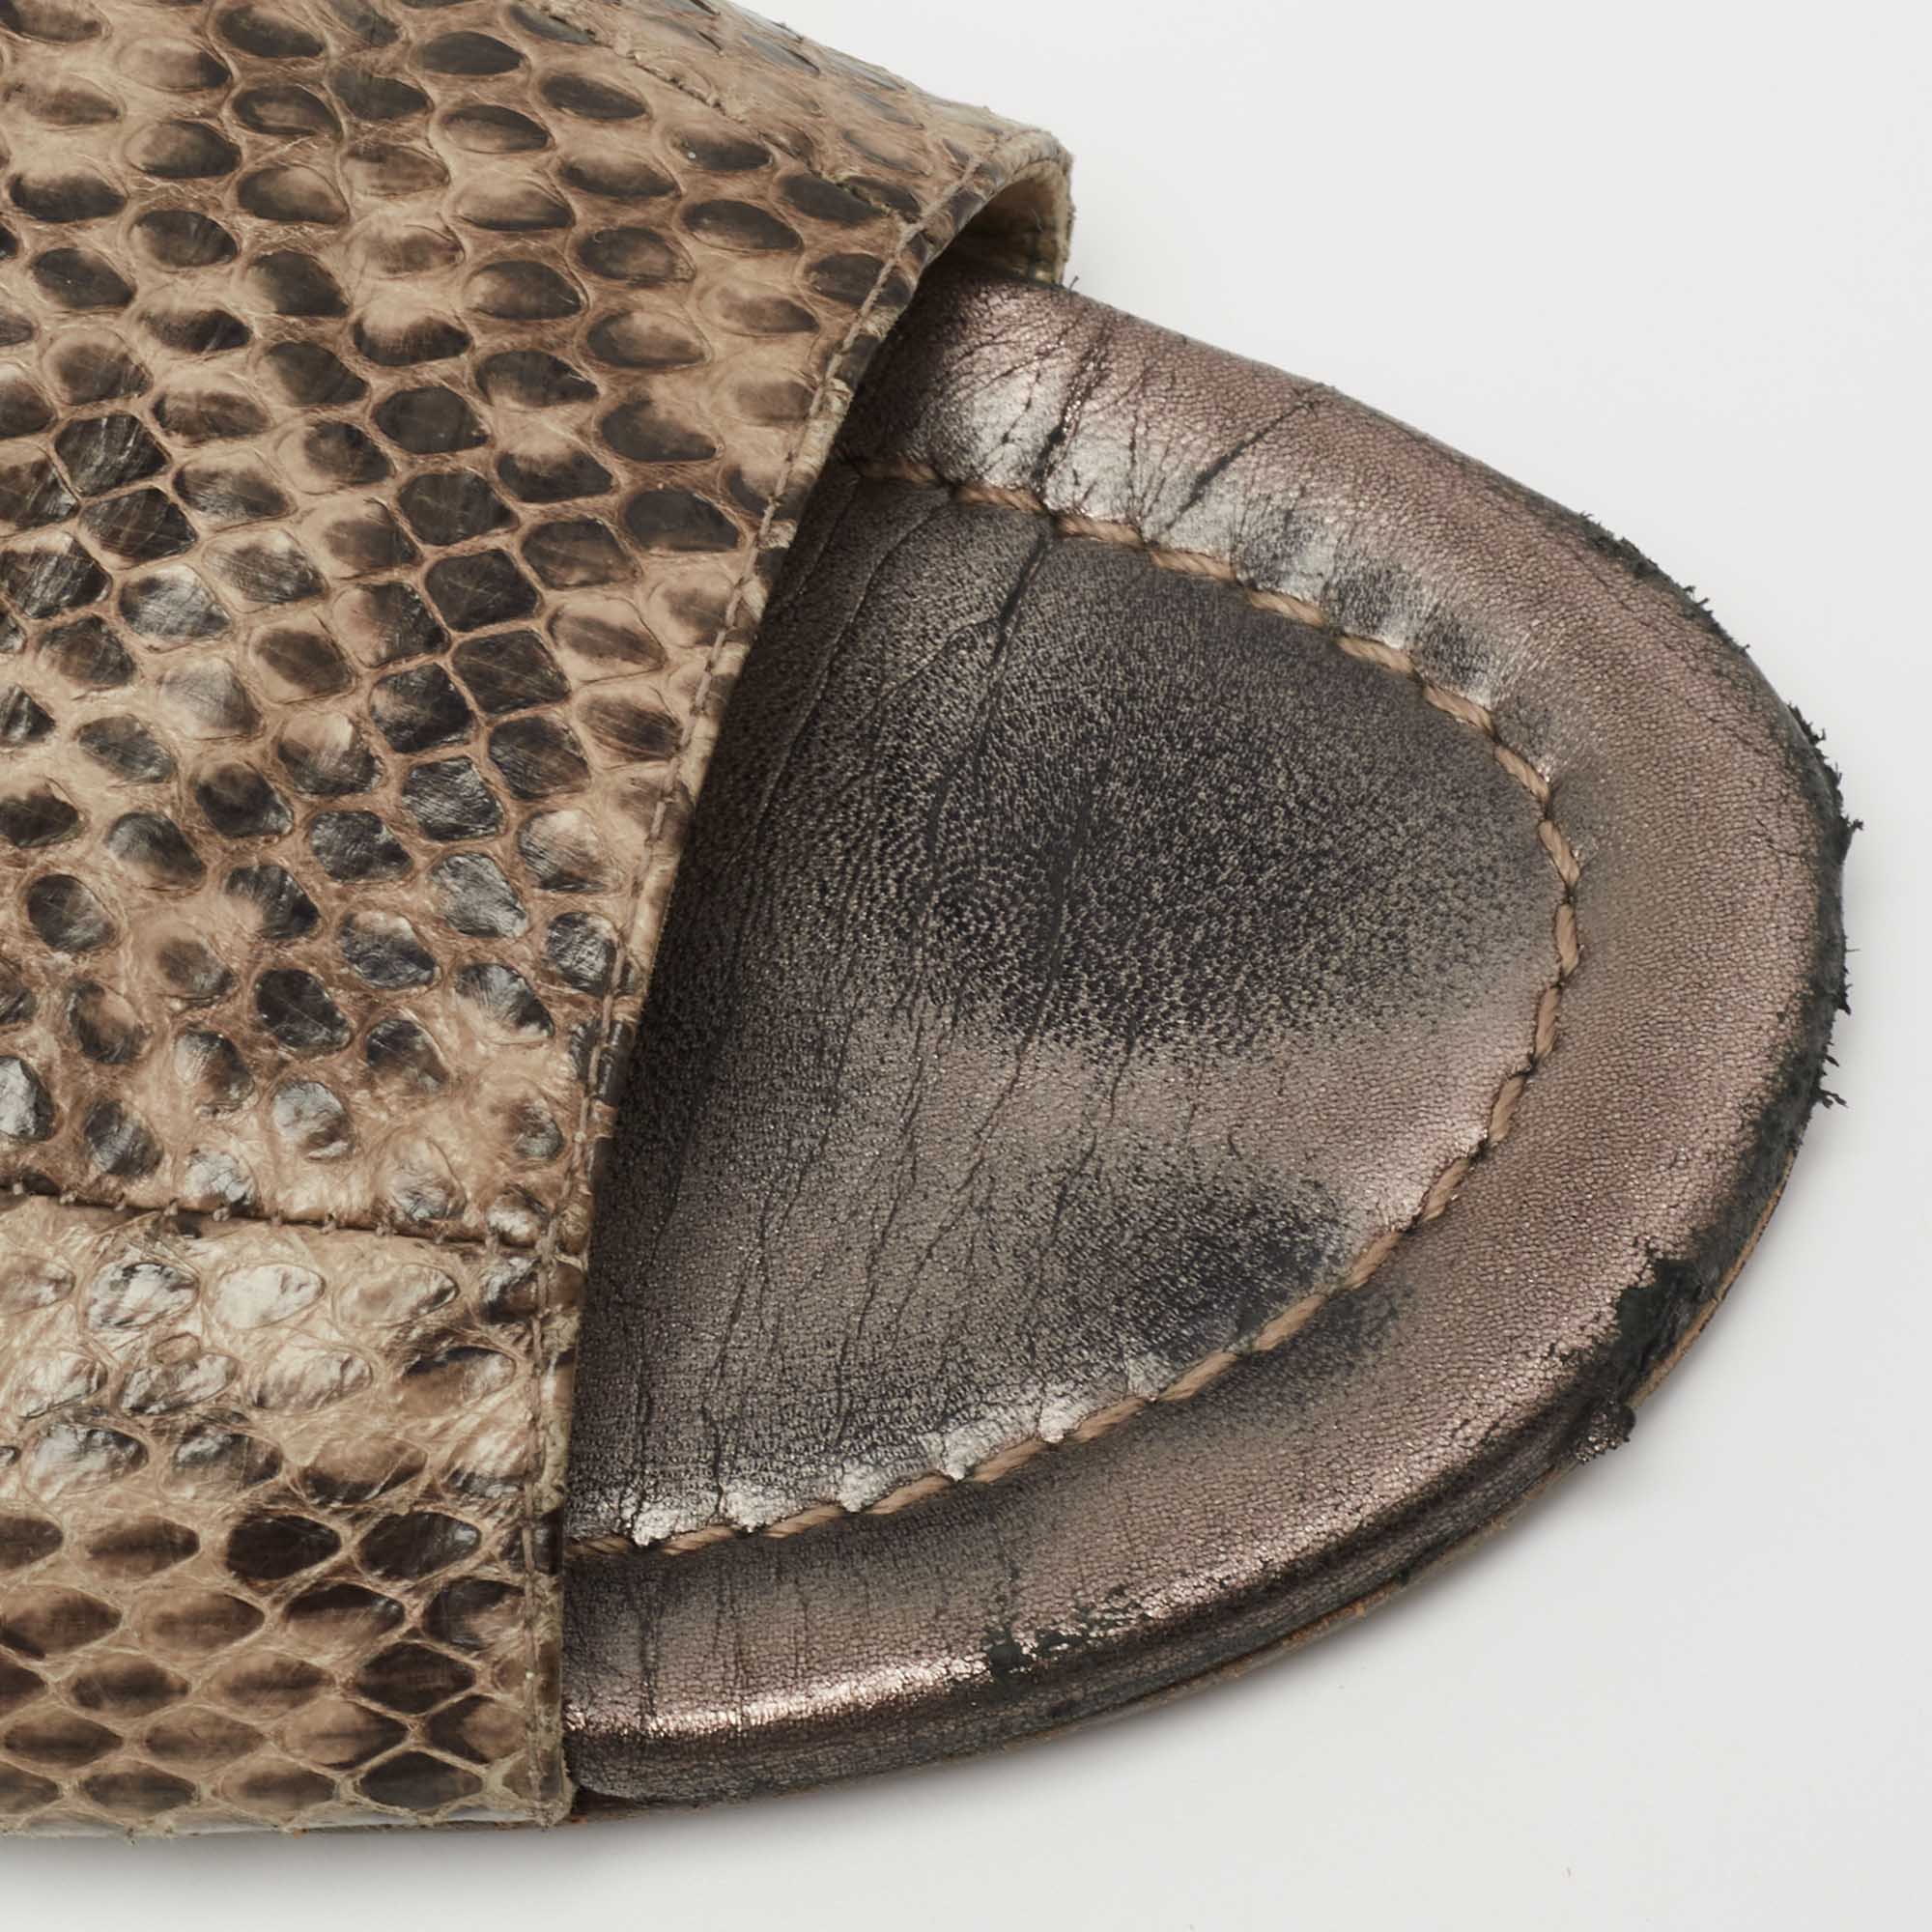 Jimmy Choo Grey Snakeskin Leather Nanda Flat Slide Sandals Size 37